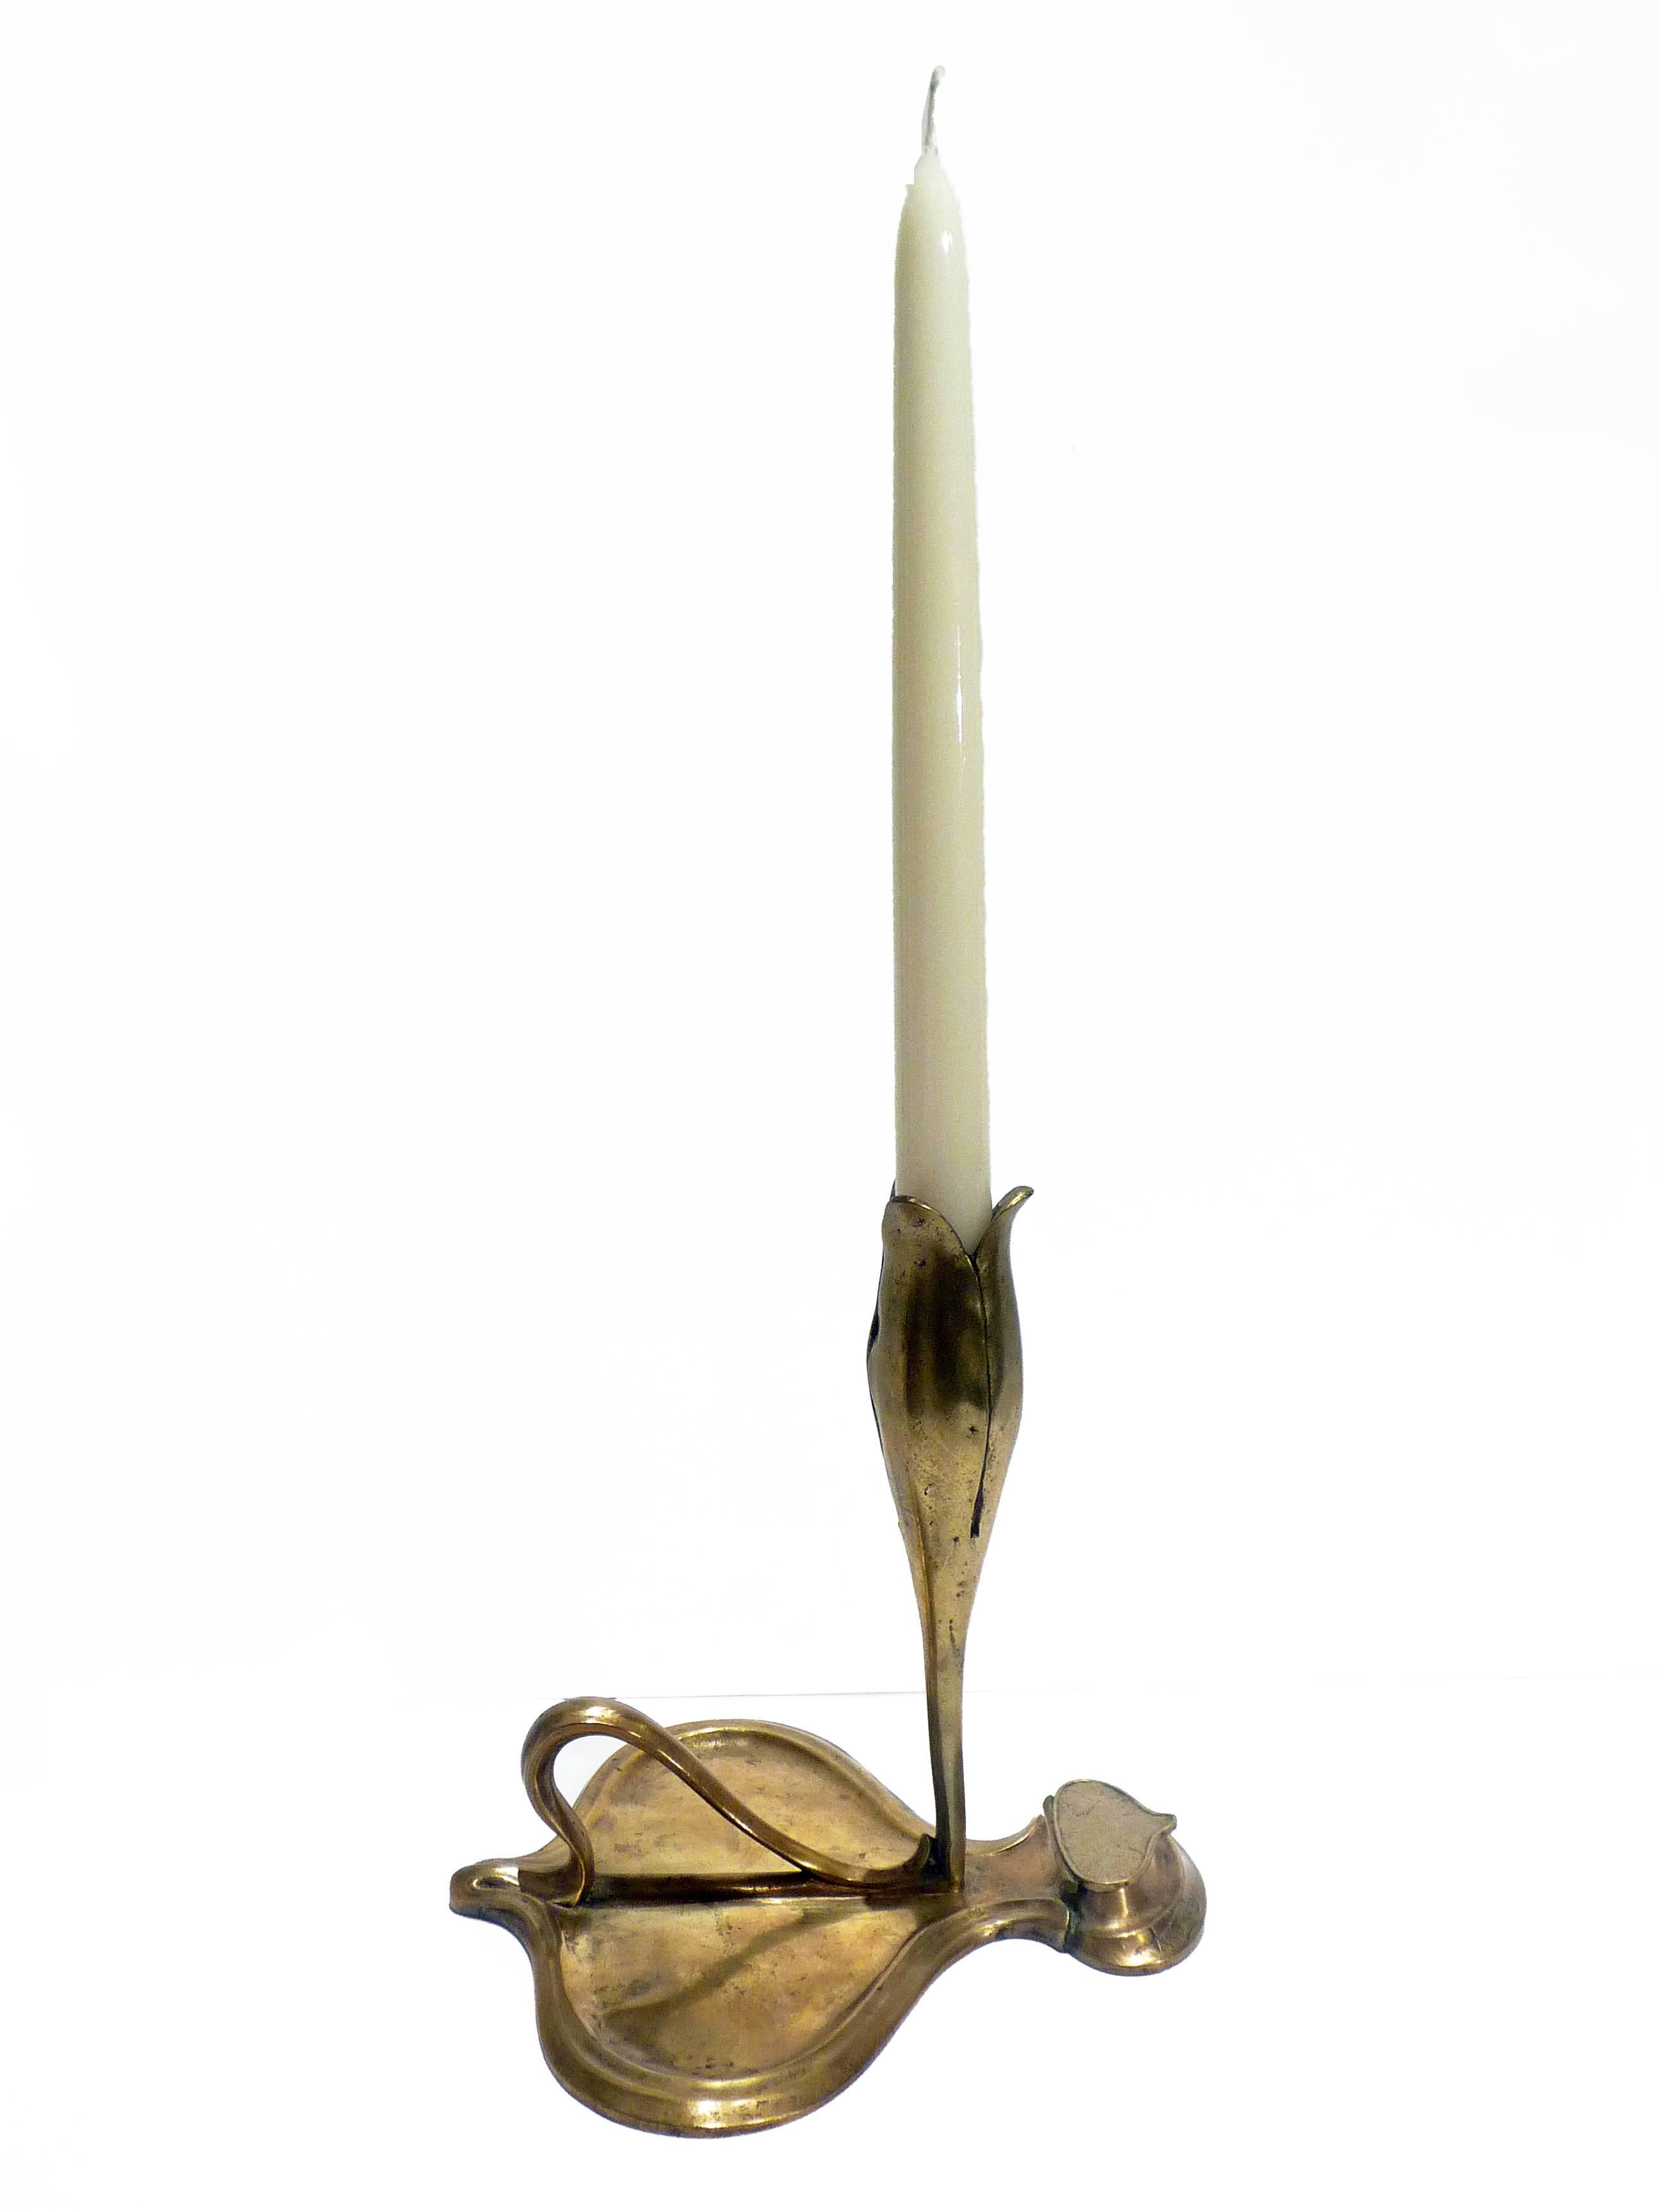 Abel Landry
An Art Nouveau gilt bronze candlestick
Signed.